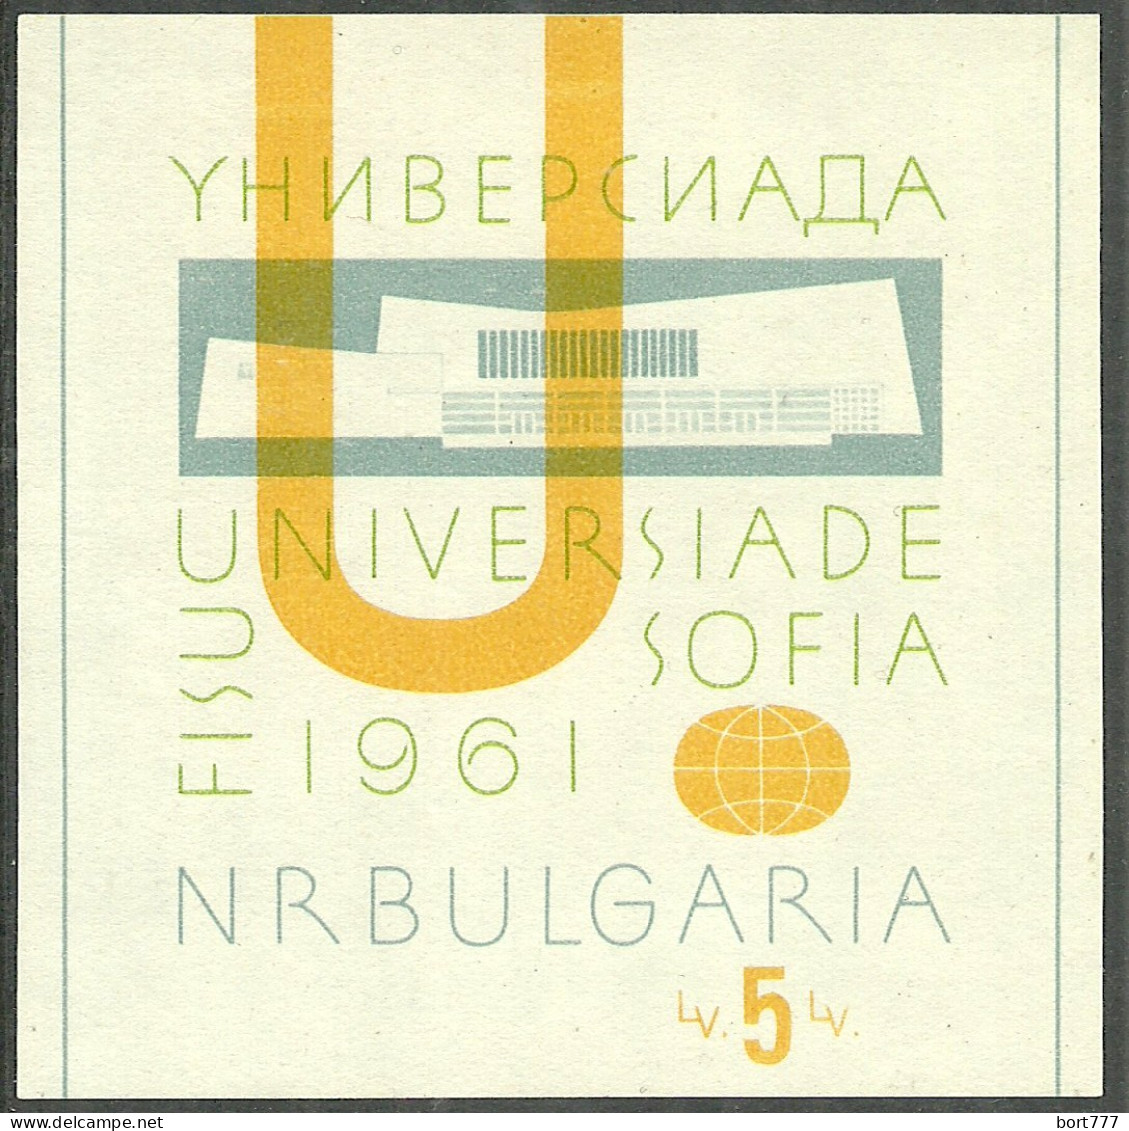 BULGARIA 1961 Year , Block Mint MNH(**) - Blocs-feuillets